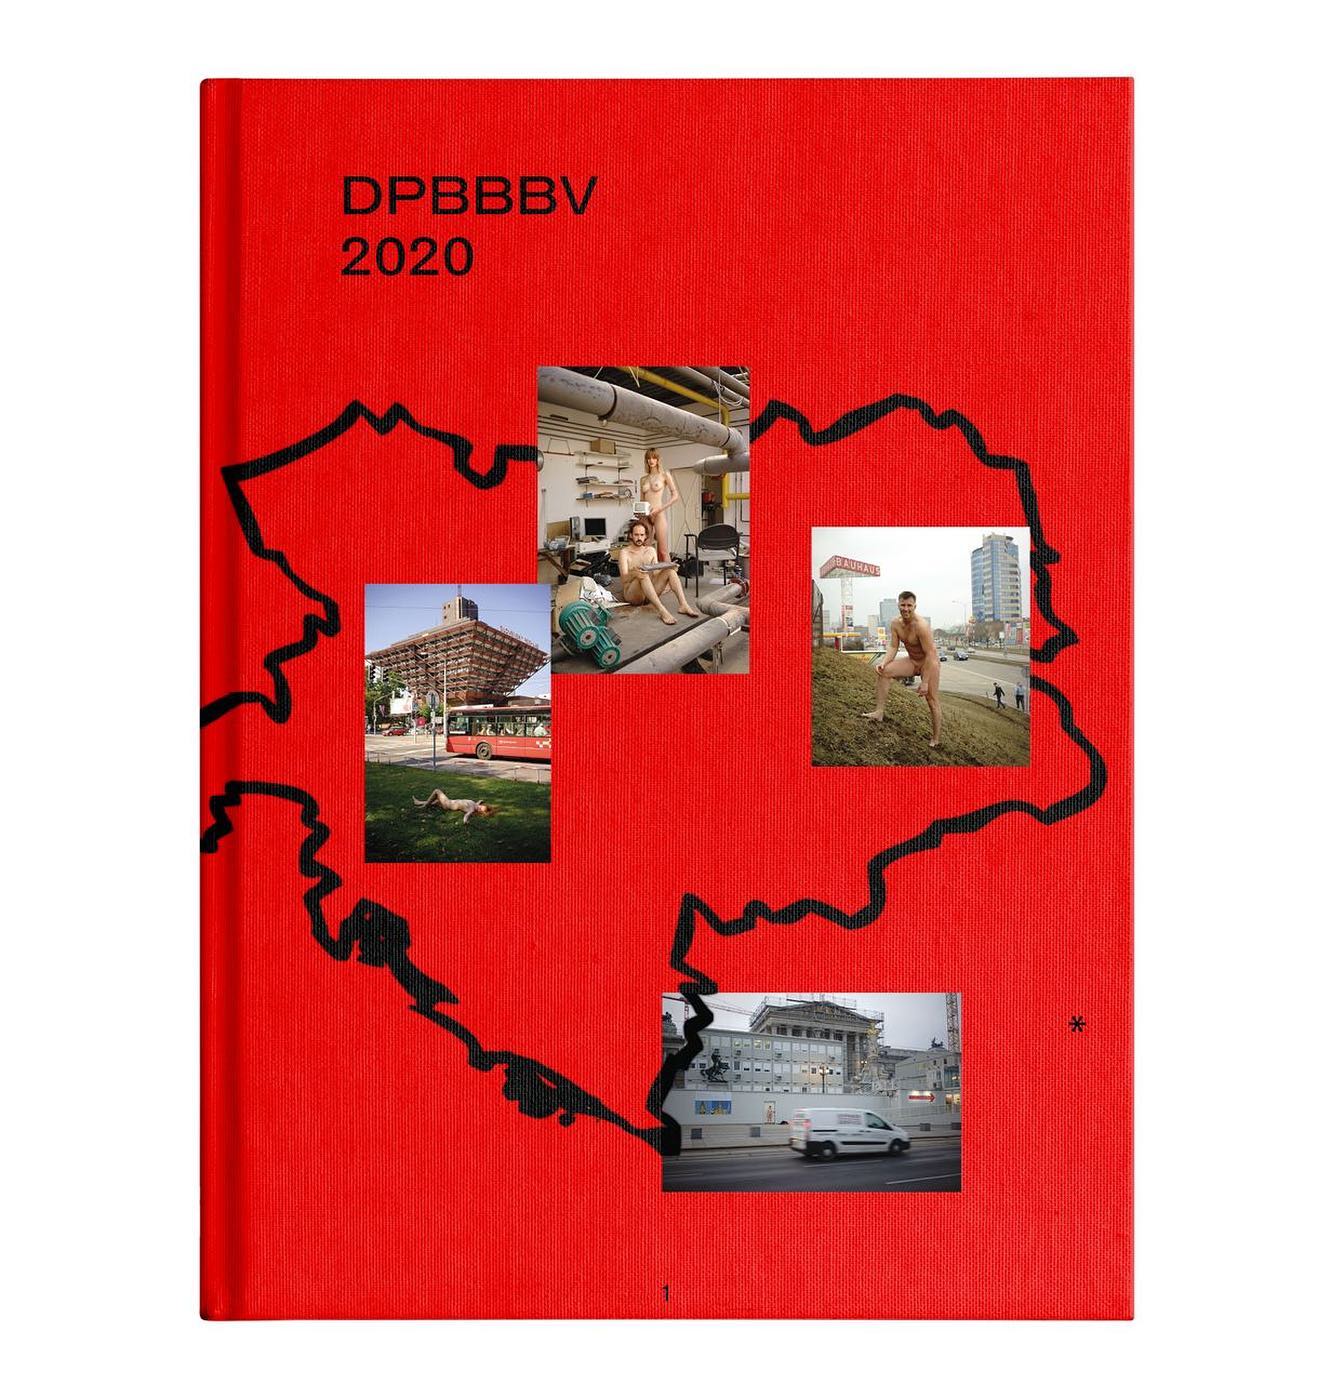 Daily Portrait Brno – Bratislava – Budapest – Vienna 2020 (DPBBBV 2020)